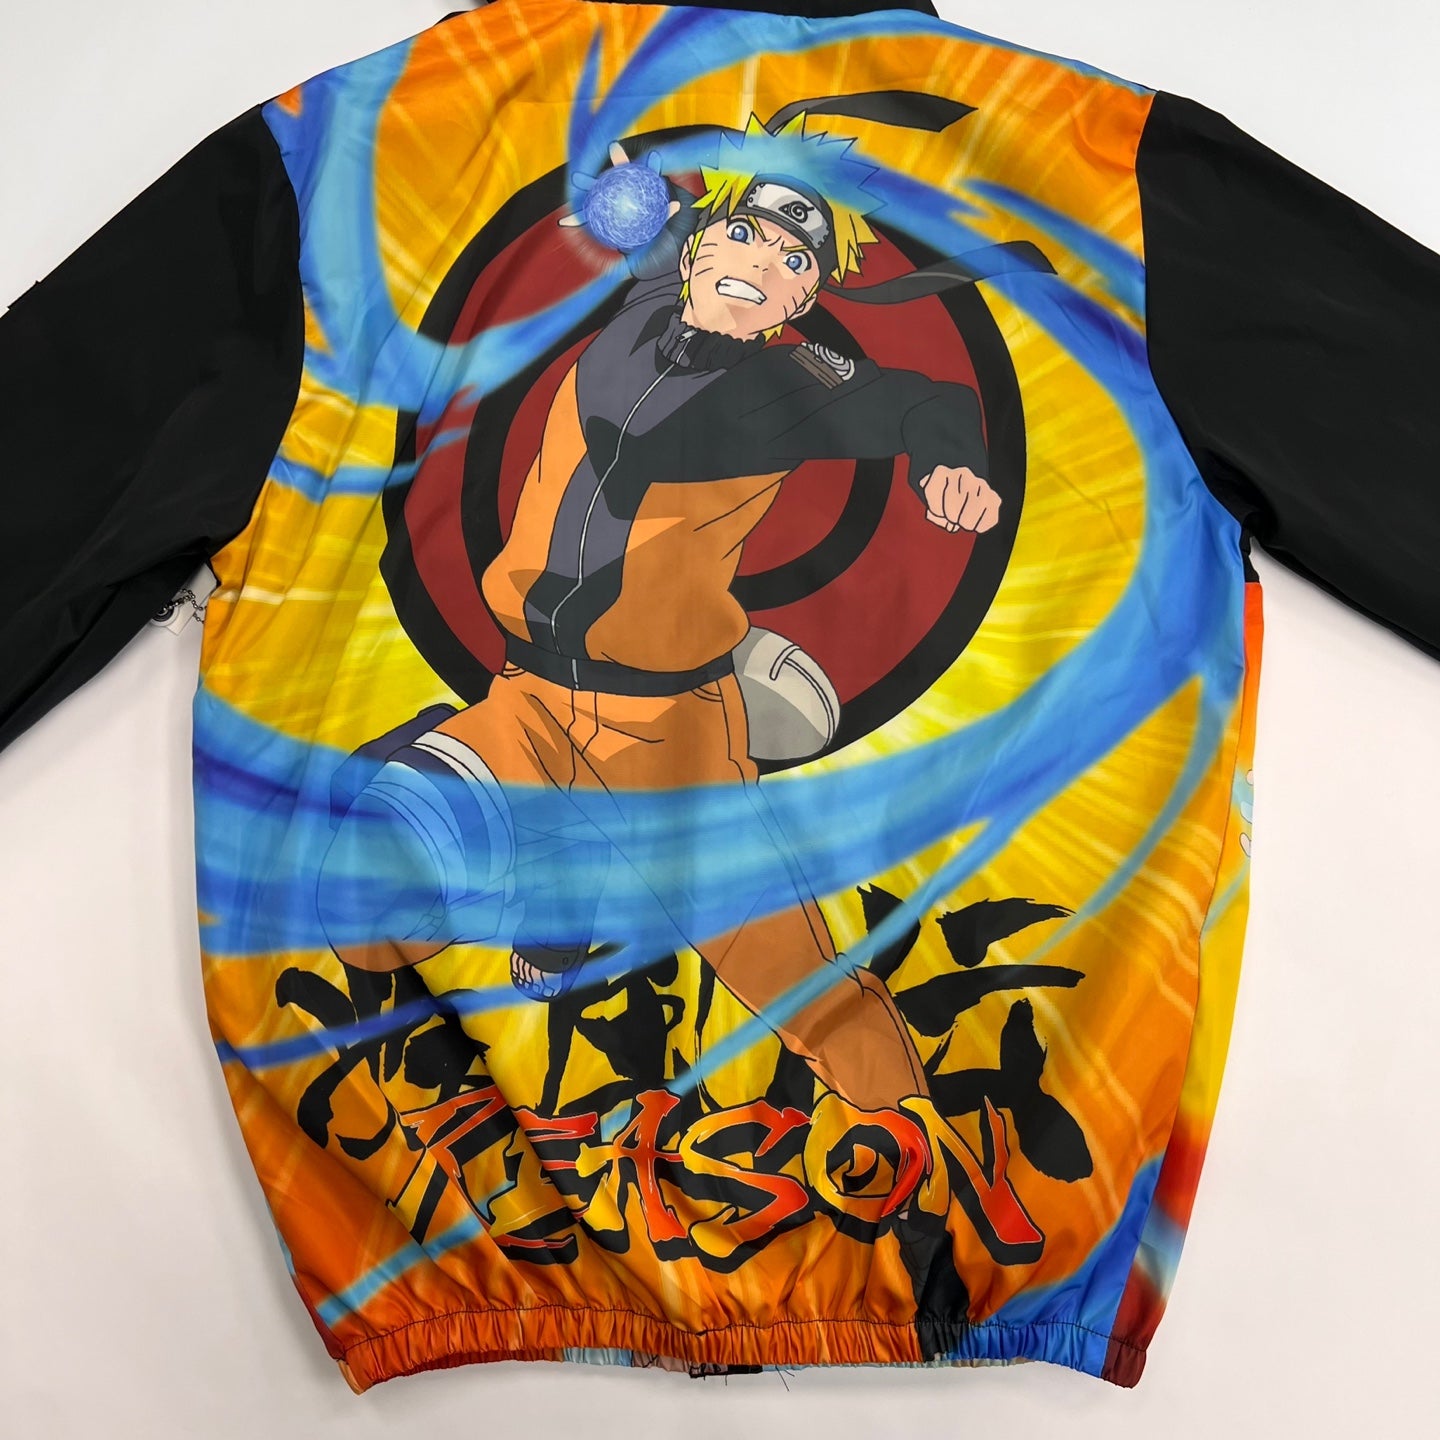 REASON CLOTHING Naruto Battle Jacket